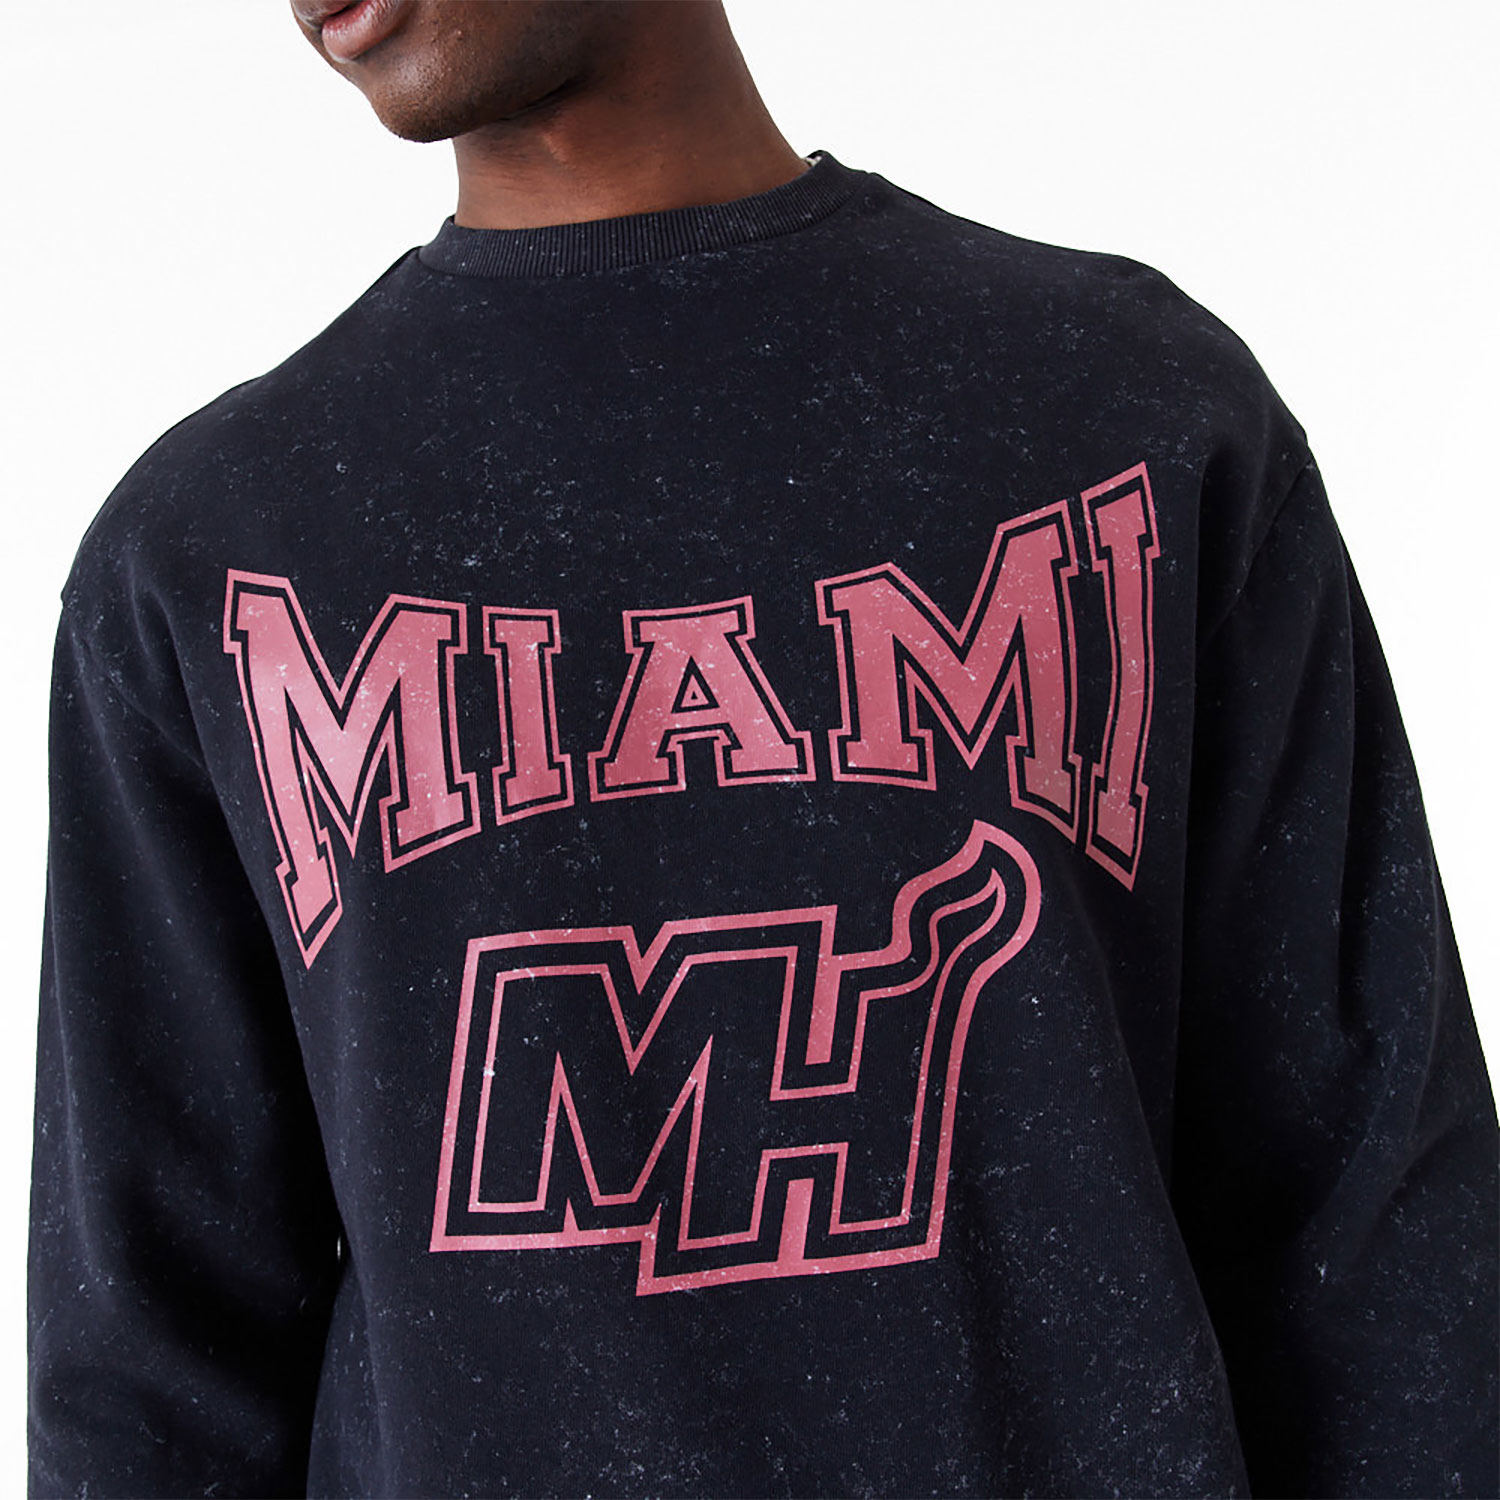 Miami Heat NBA Washed Black Crew Neck Sweatshirt